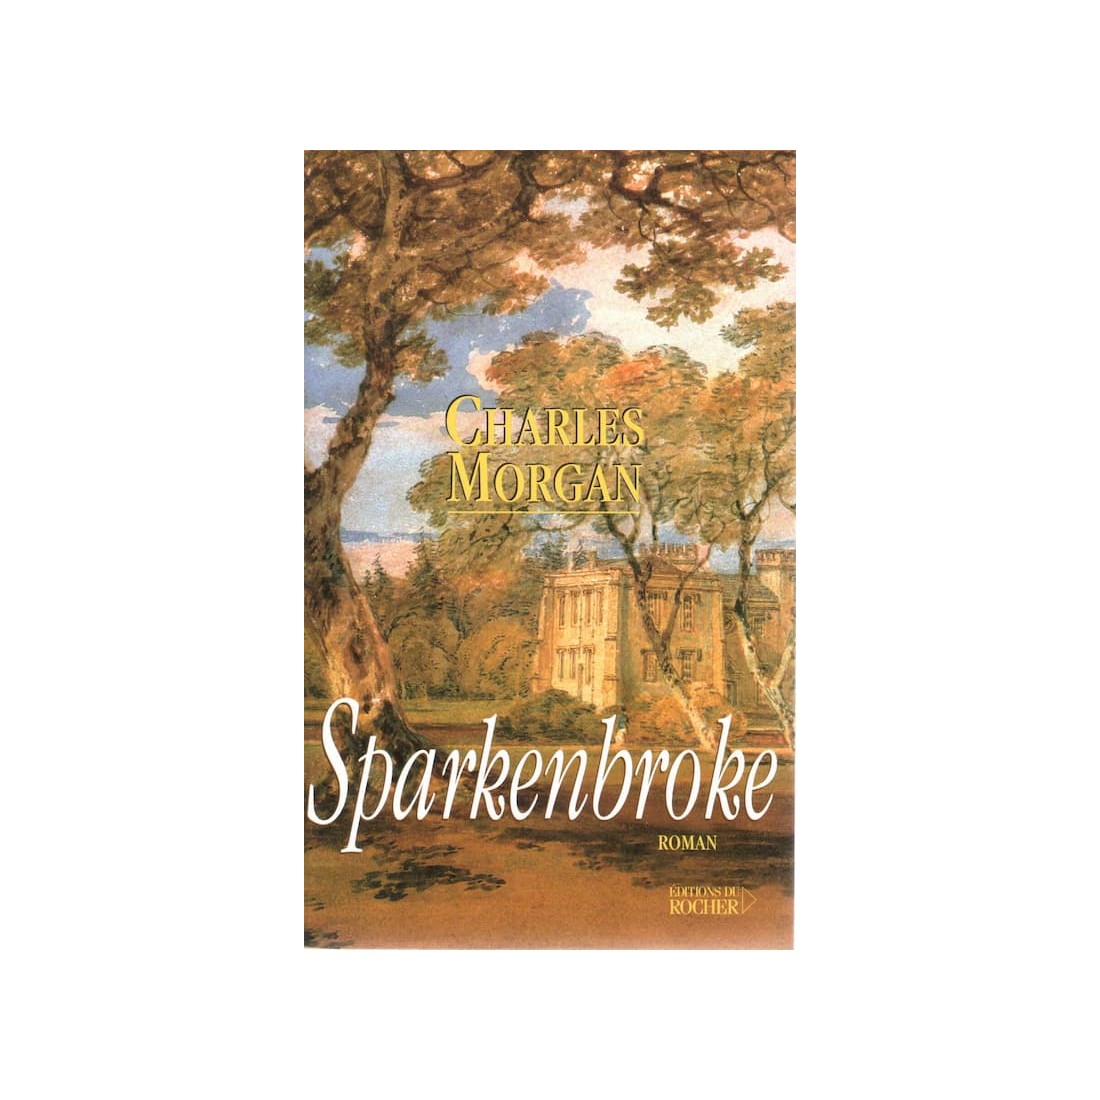 Sparkenbroke - Roman de Charles Morgan - Ocazlivres.com